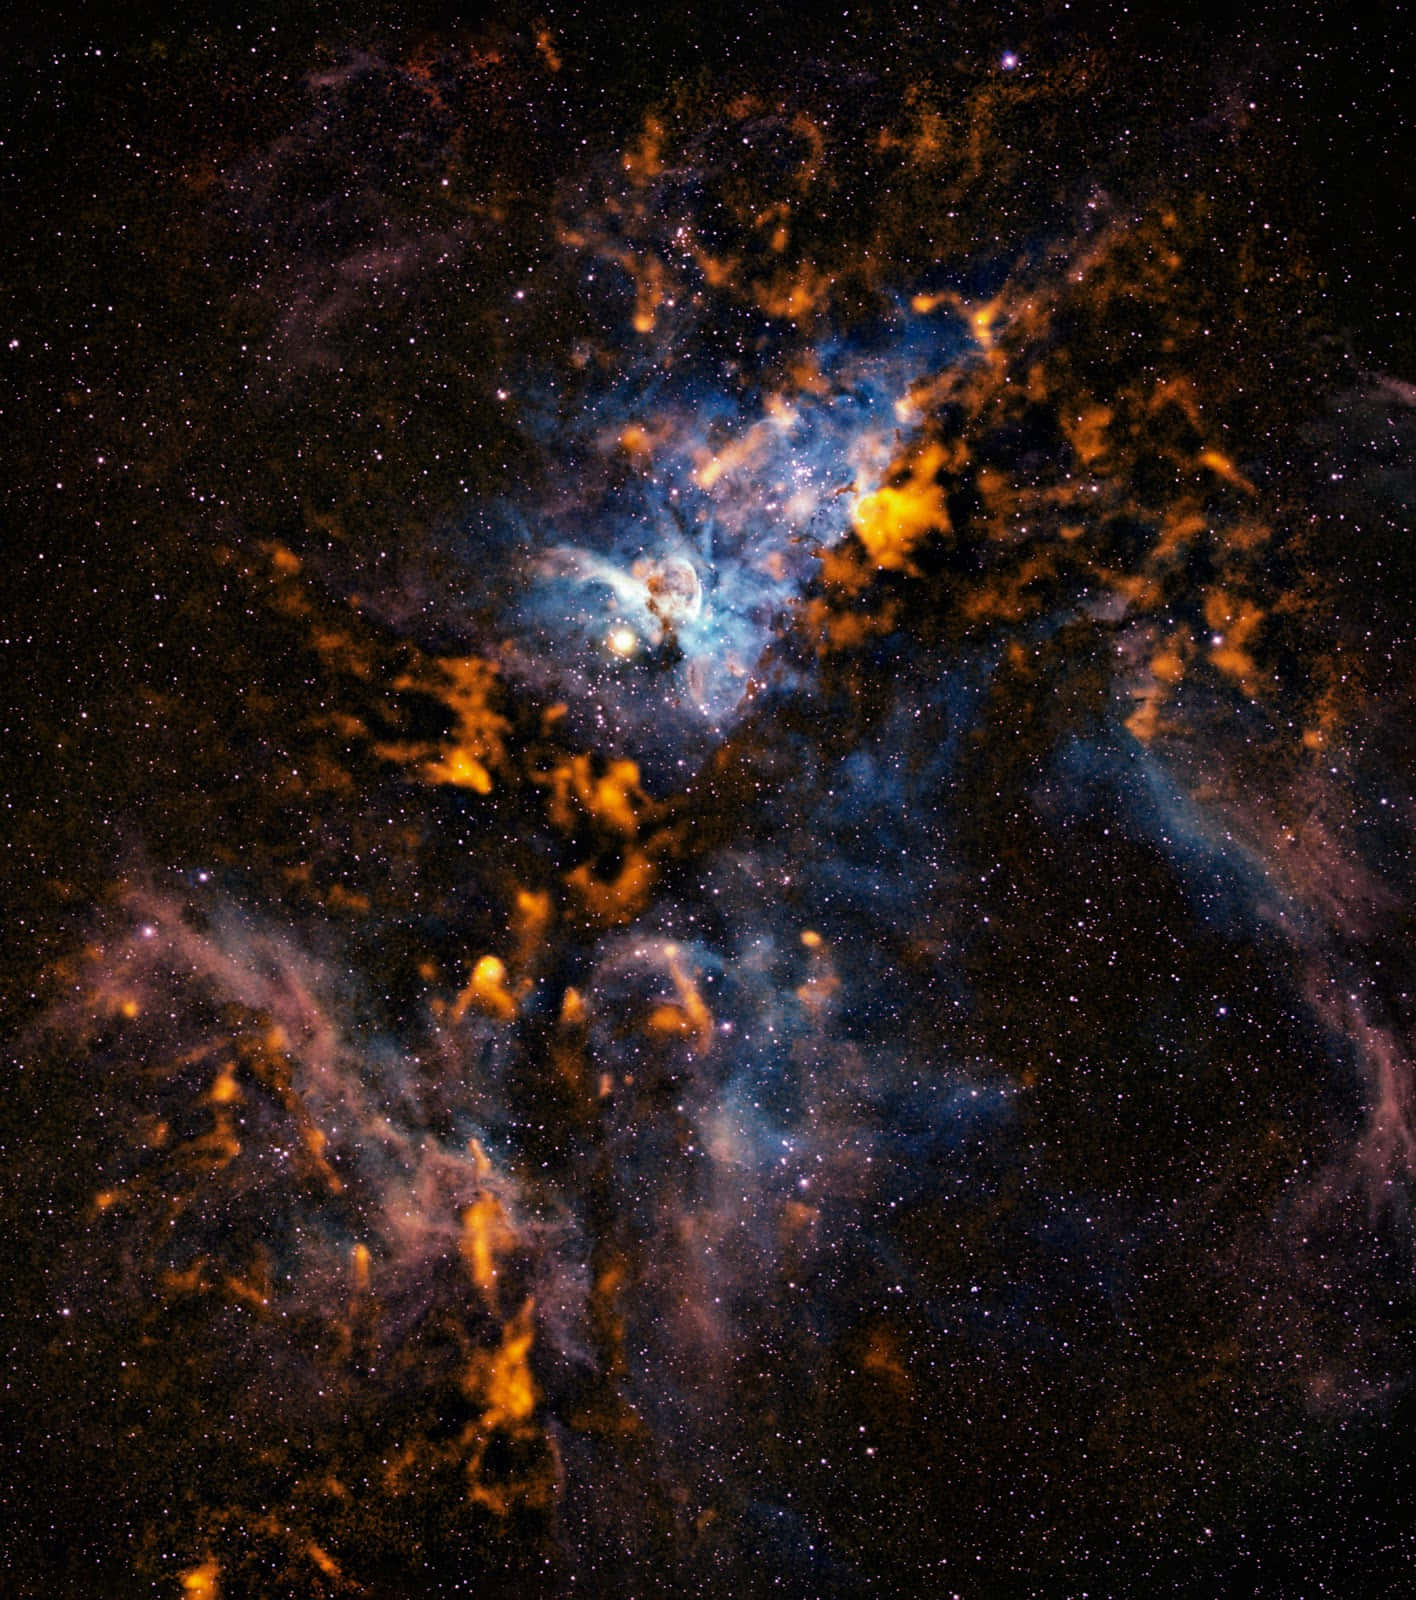 Caption: Spectacular View of the Carina Nebula Wallpaper